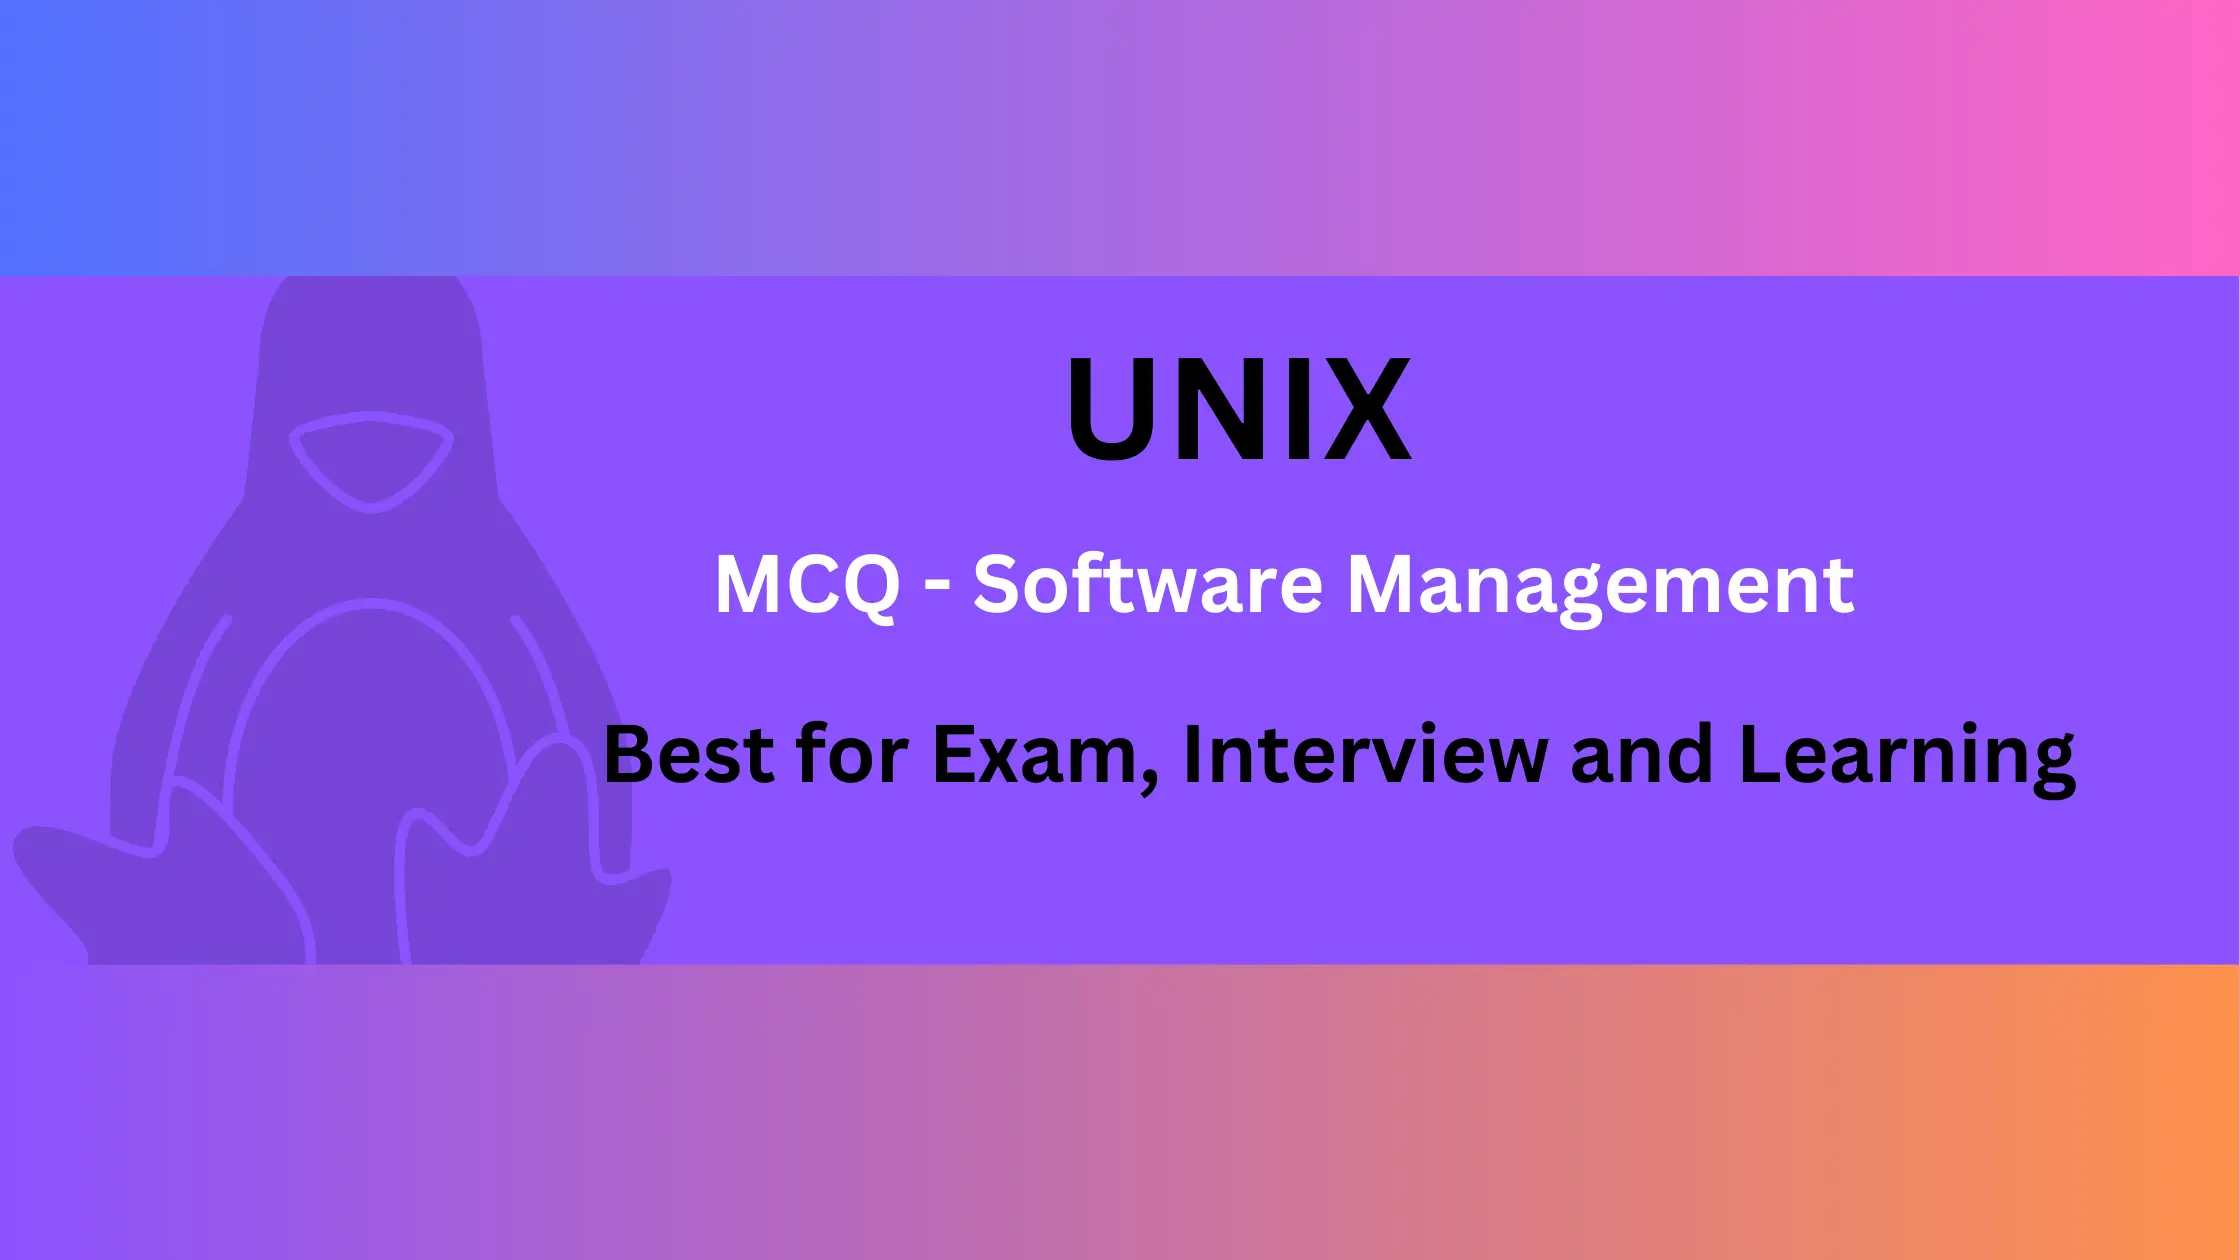 UNIX MCQ on Software Management